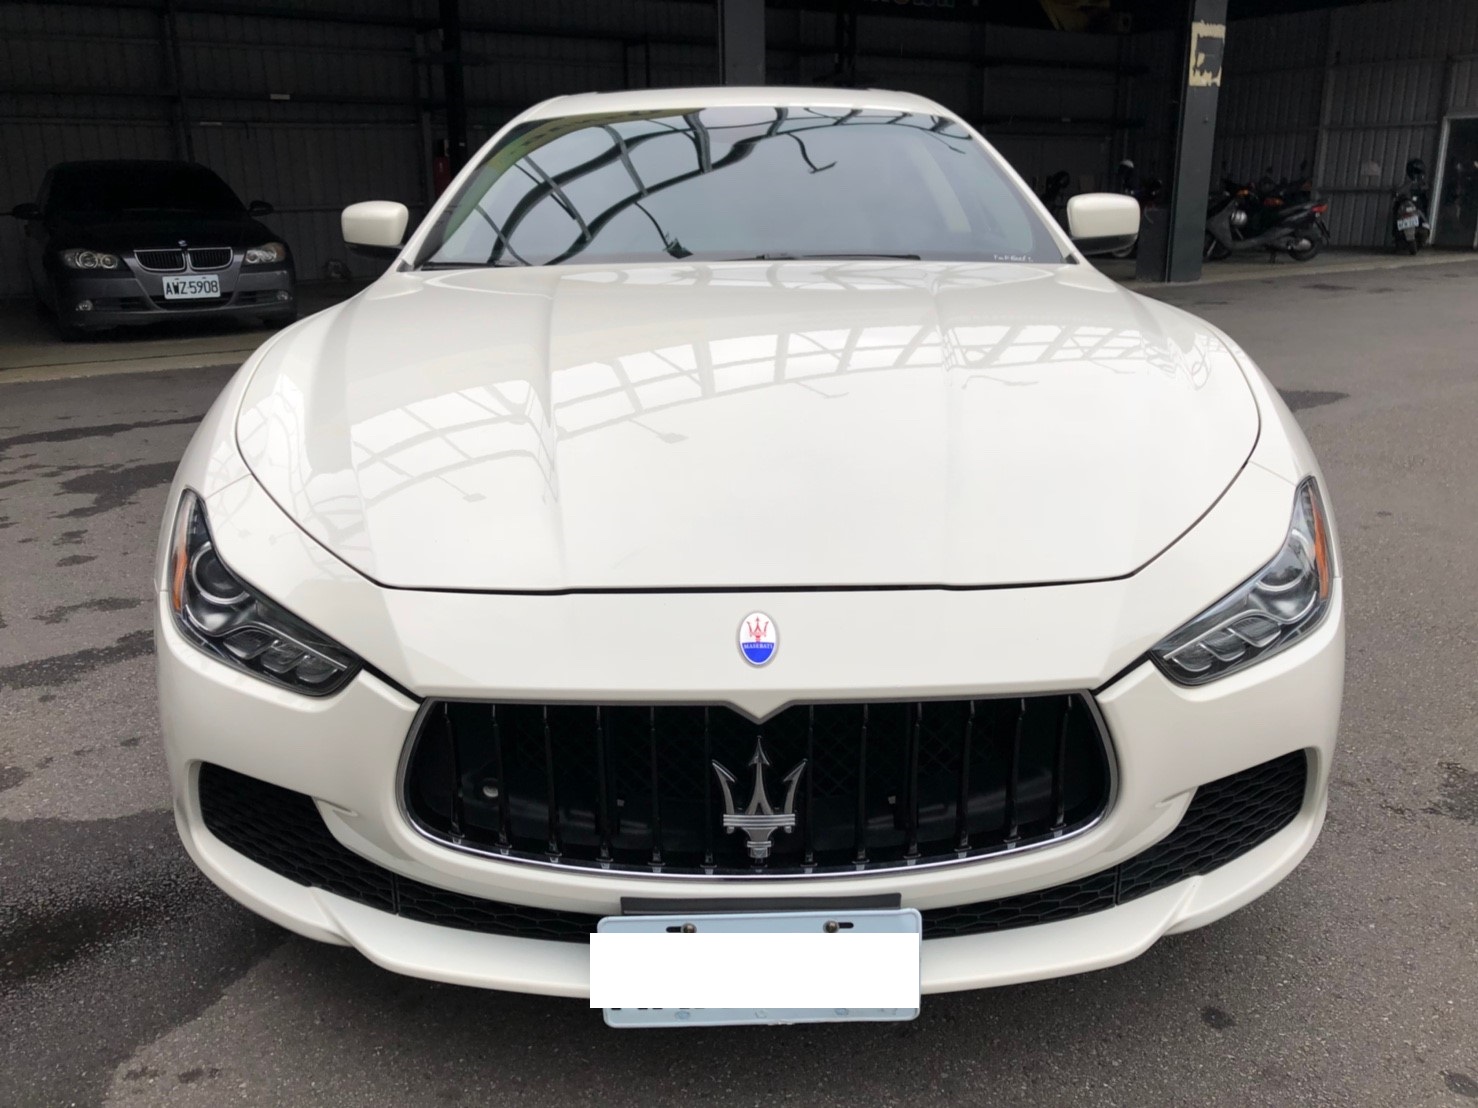 2014 Maserati 瑪莎拉蒂 Ghibli